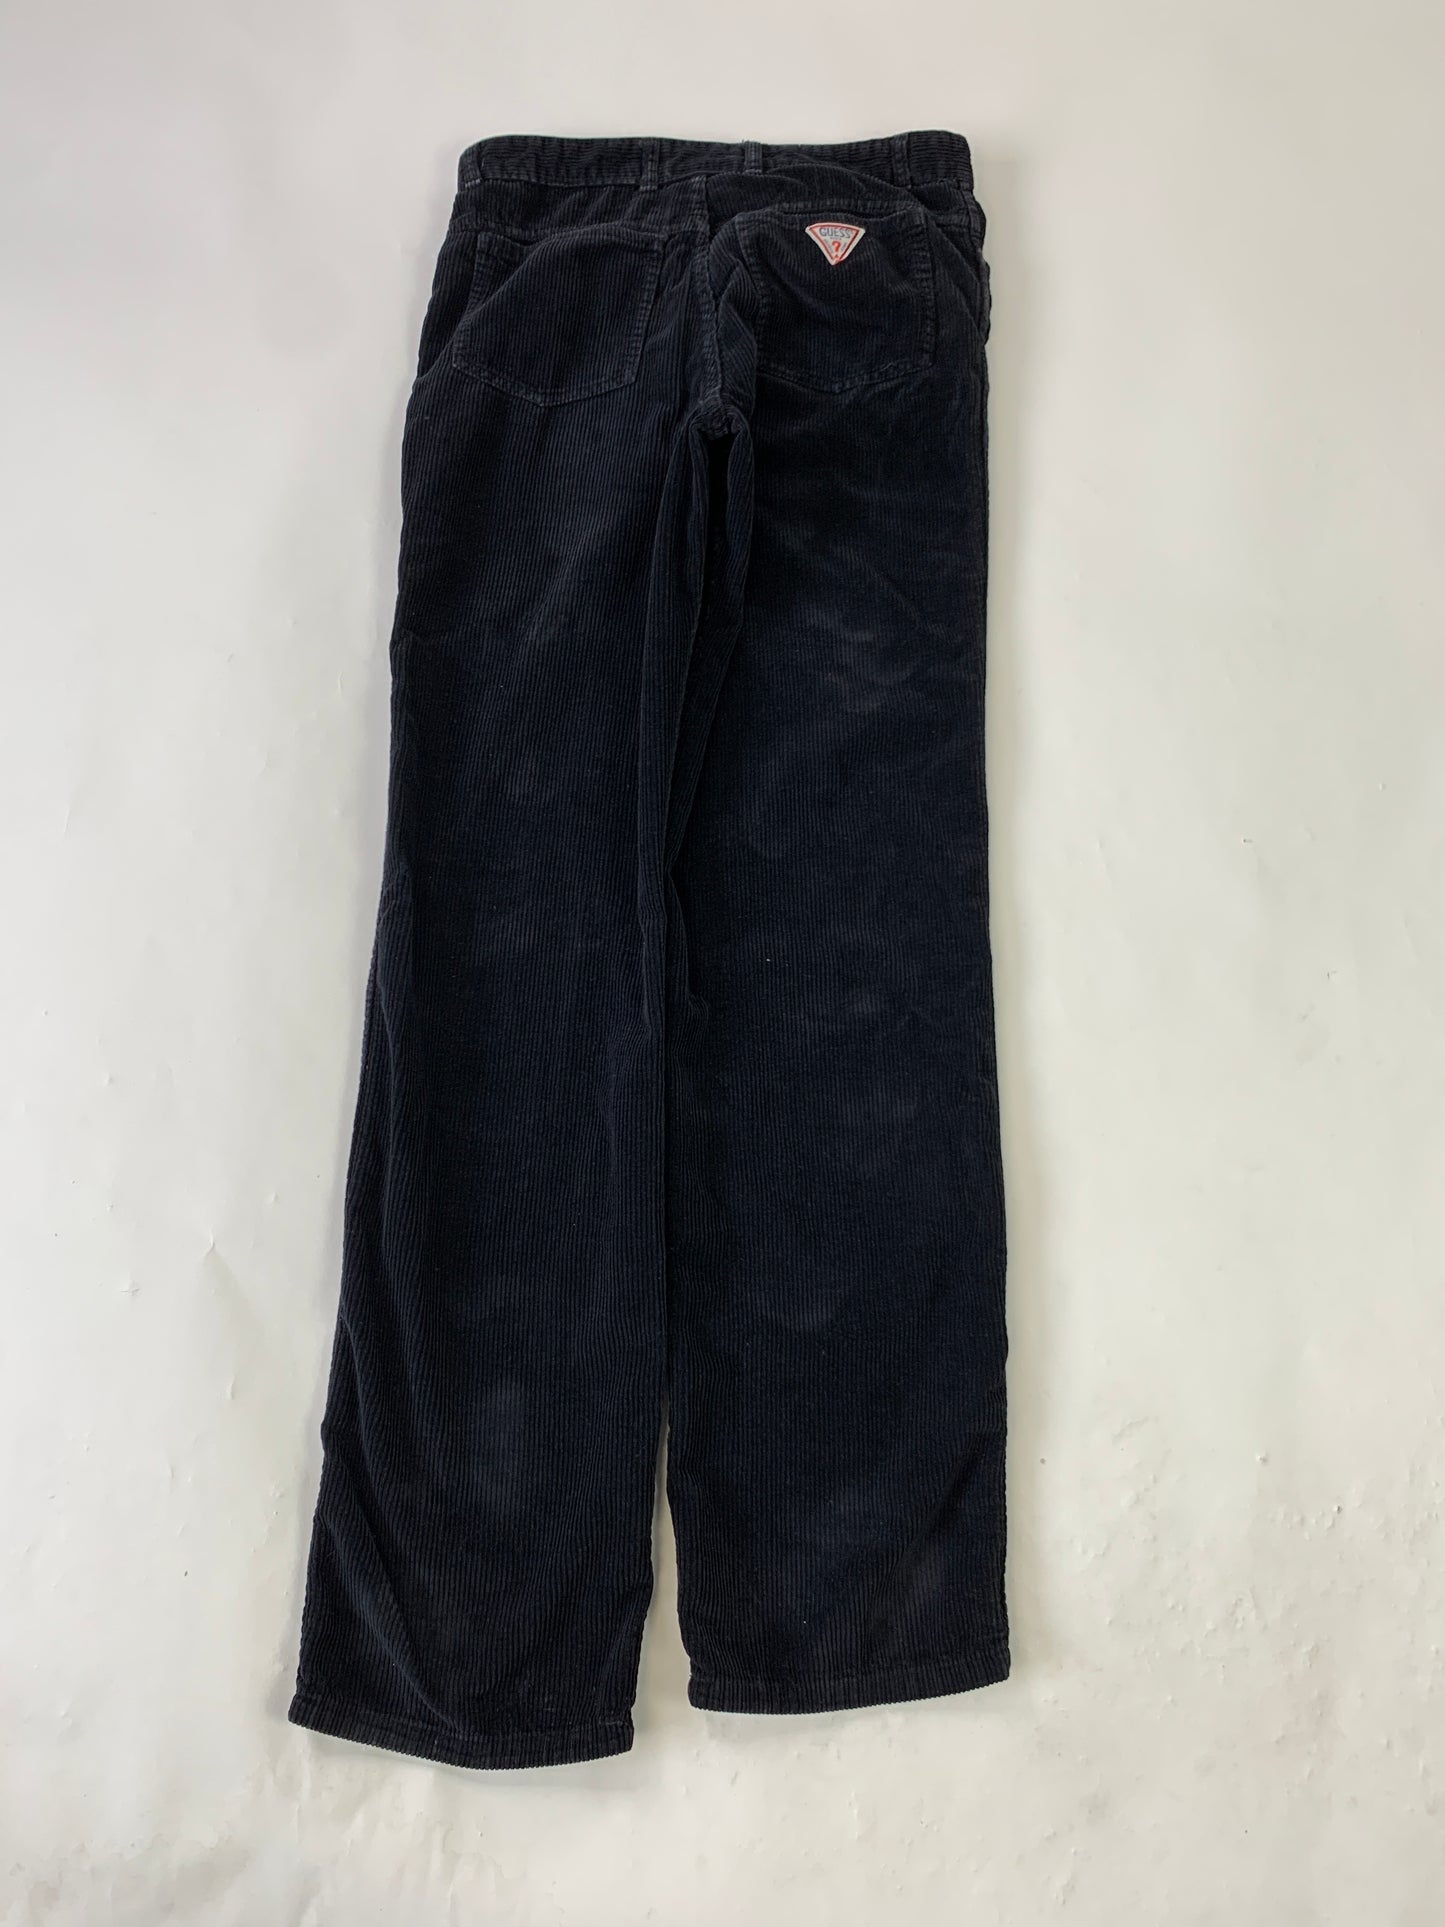 Guess Vintage Corduroy Pants - 28